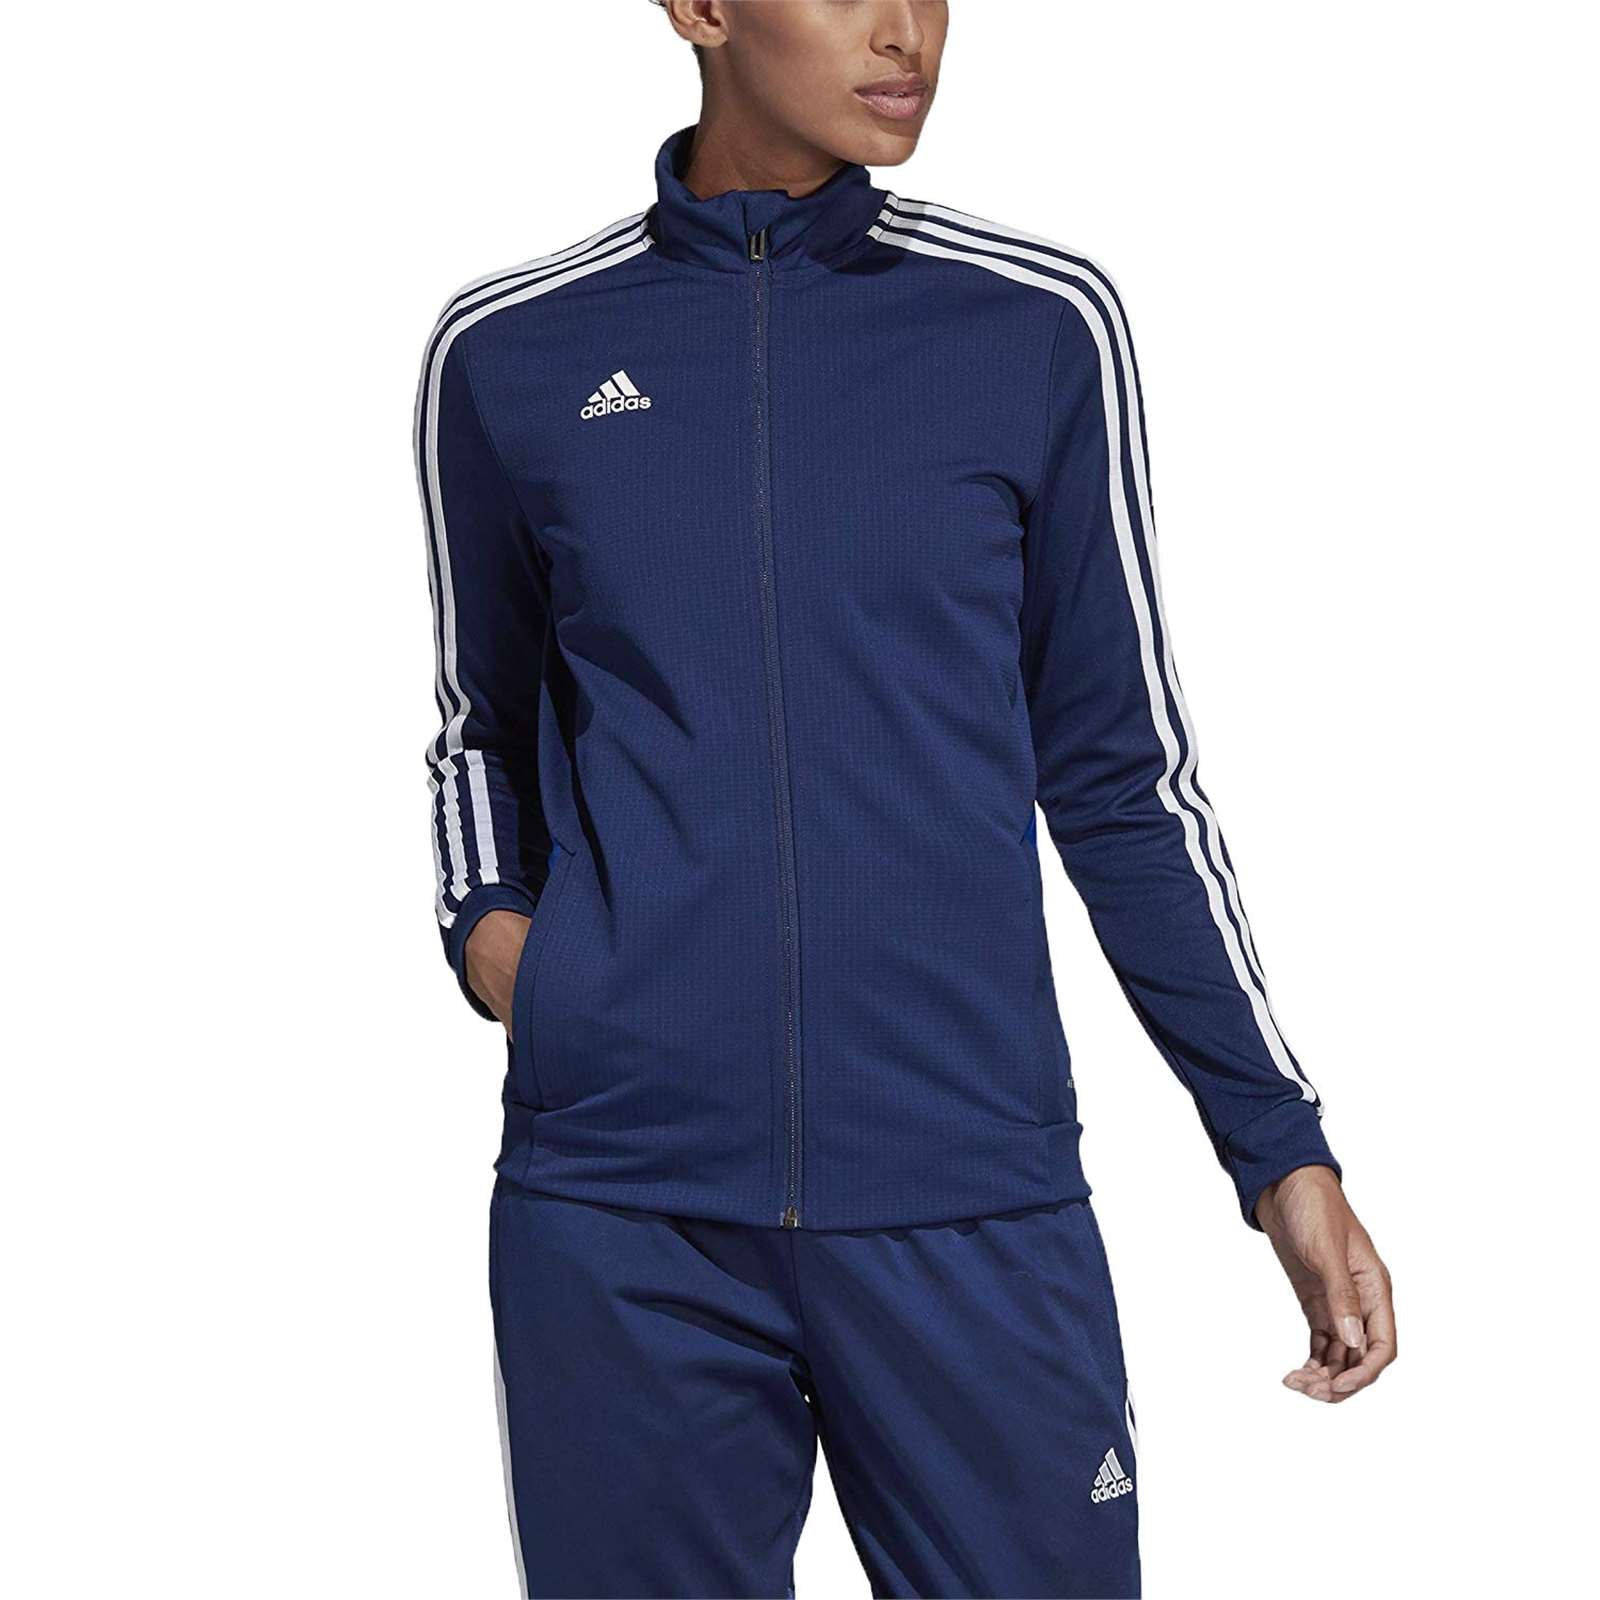 Adidas Women Tiro 19 Training Soccer Jacket